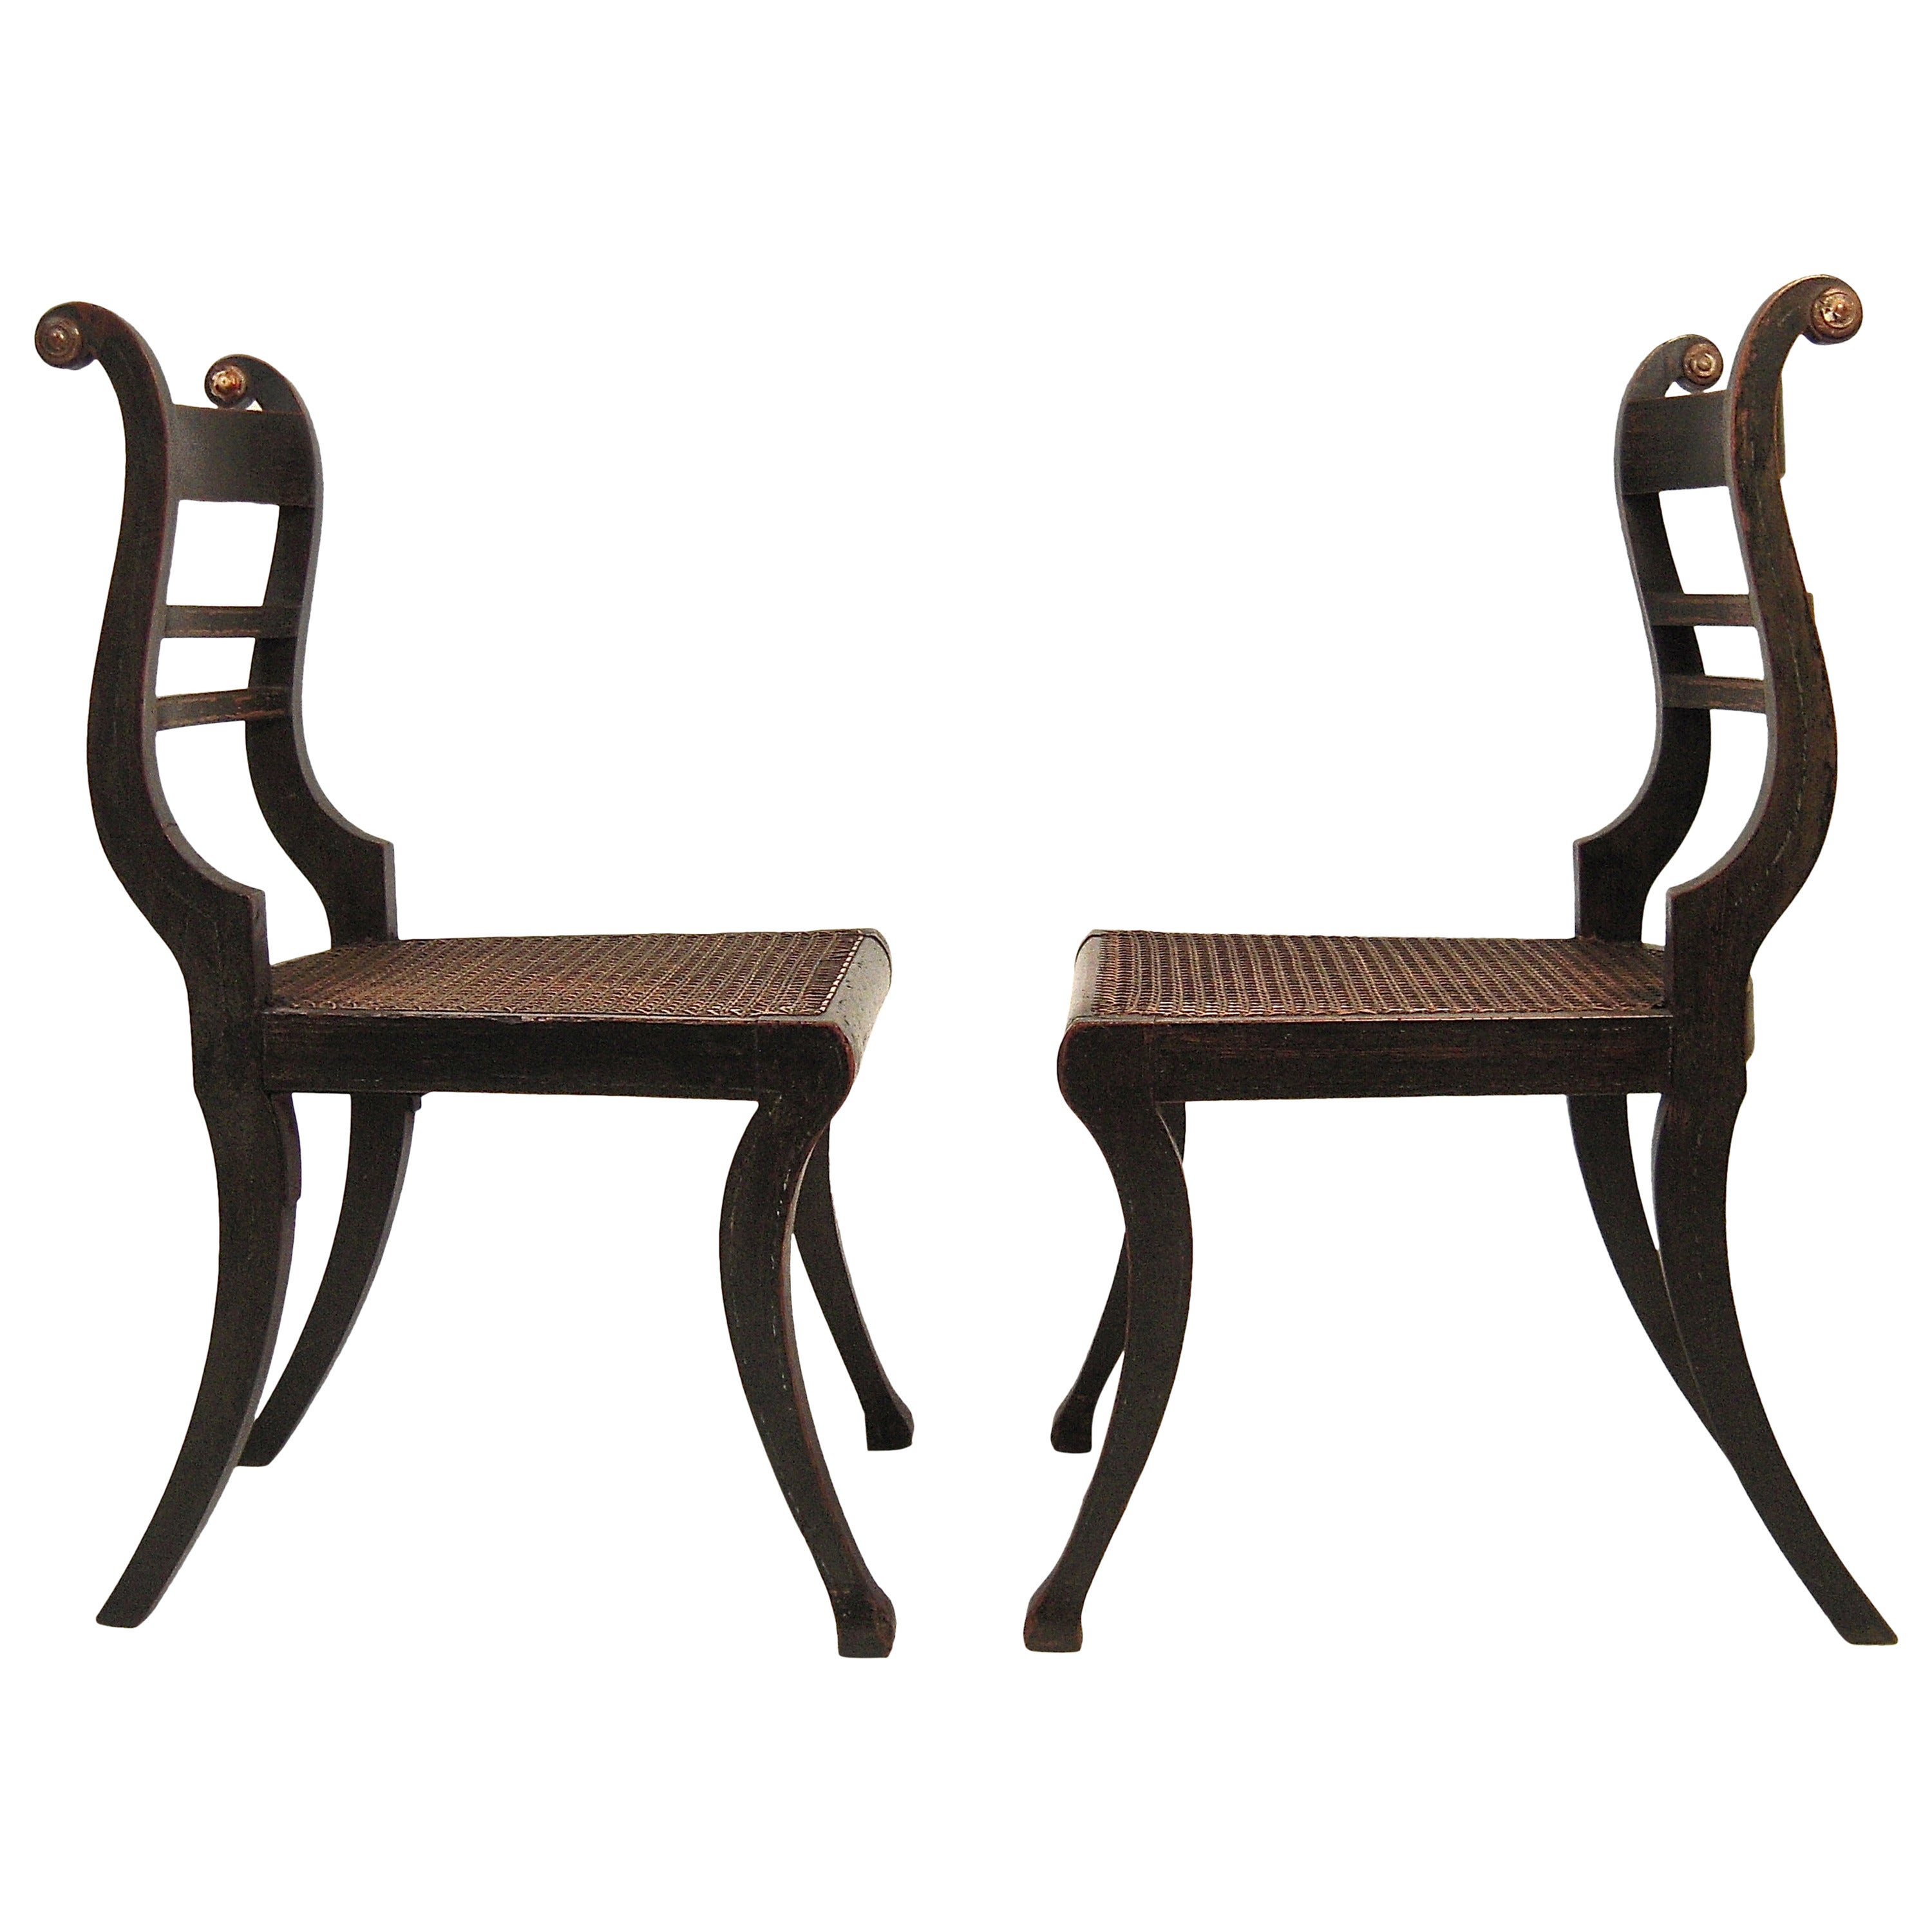 Pair of Sculptural English Regency Period Chairs, circa 1810